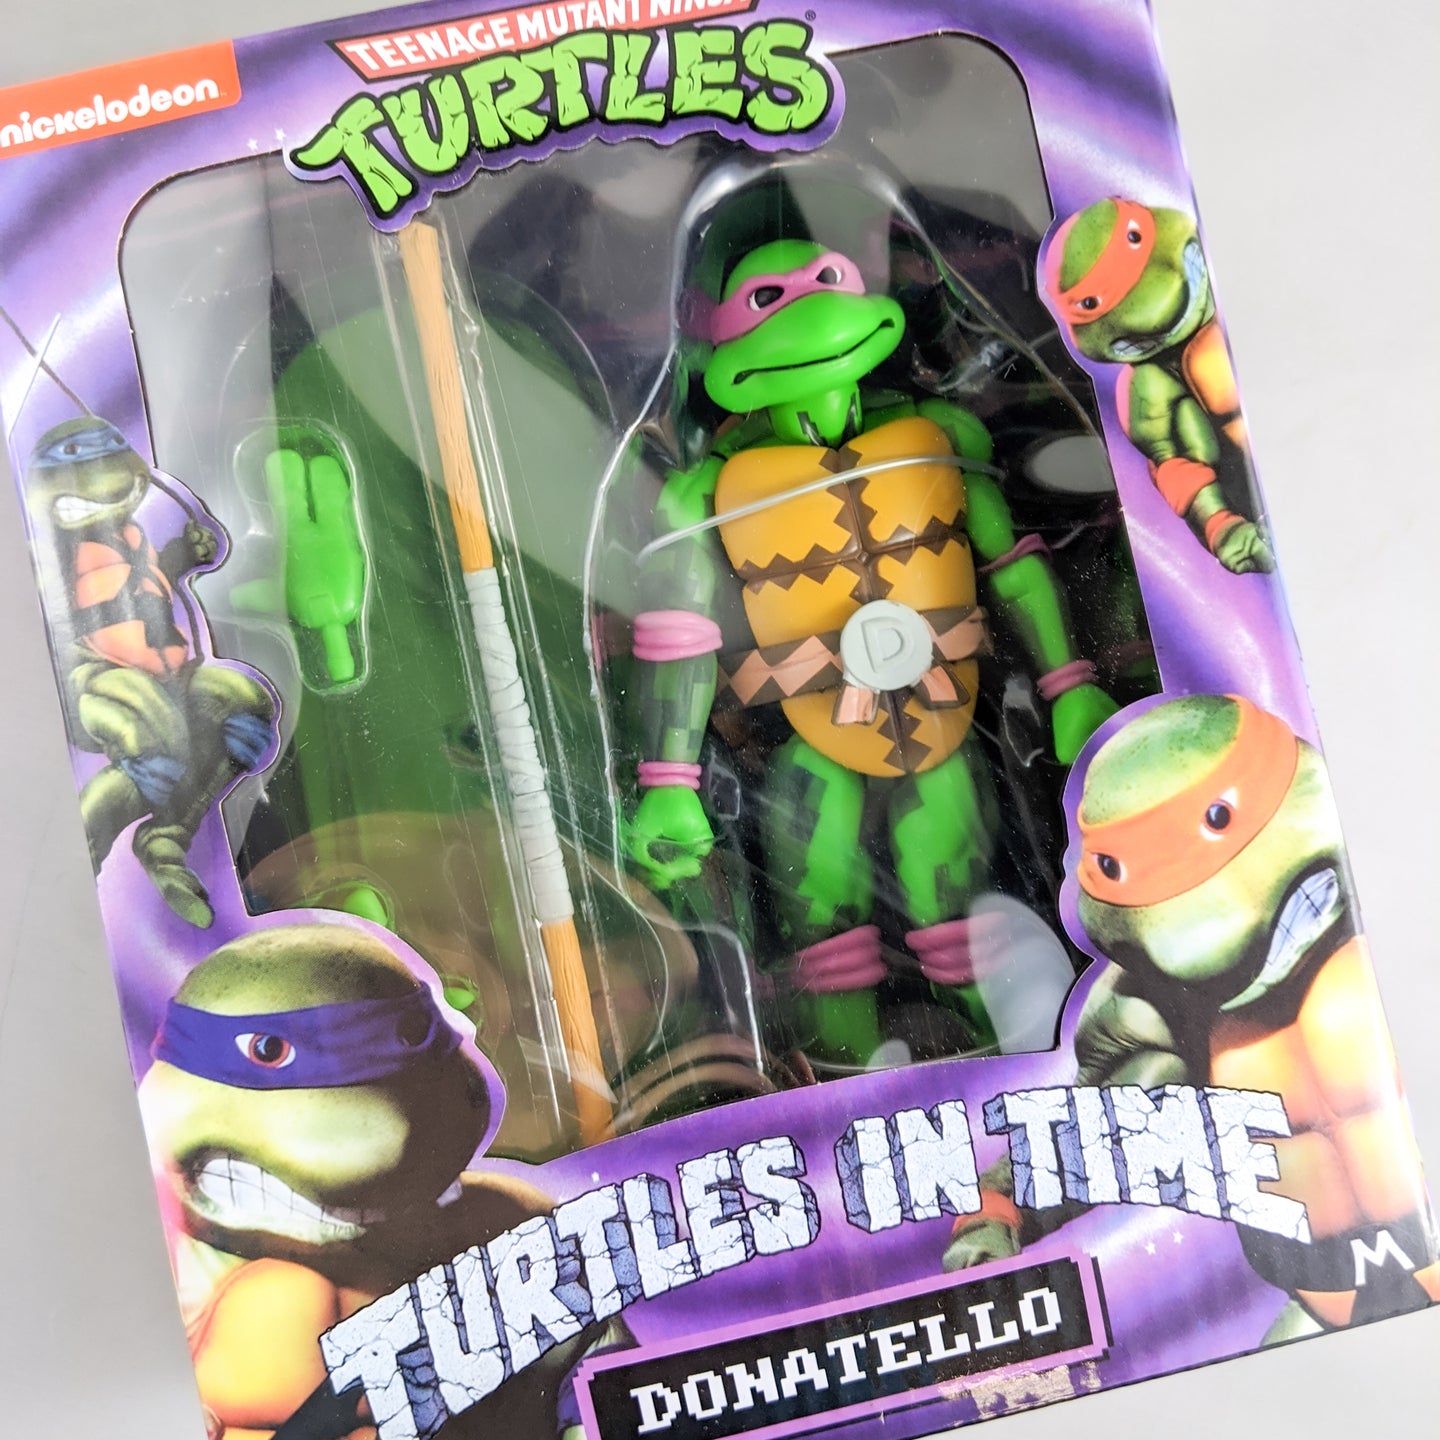 TMNT Teenage Mutant Ninja Turtles Donatello 7 inch action figure.